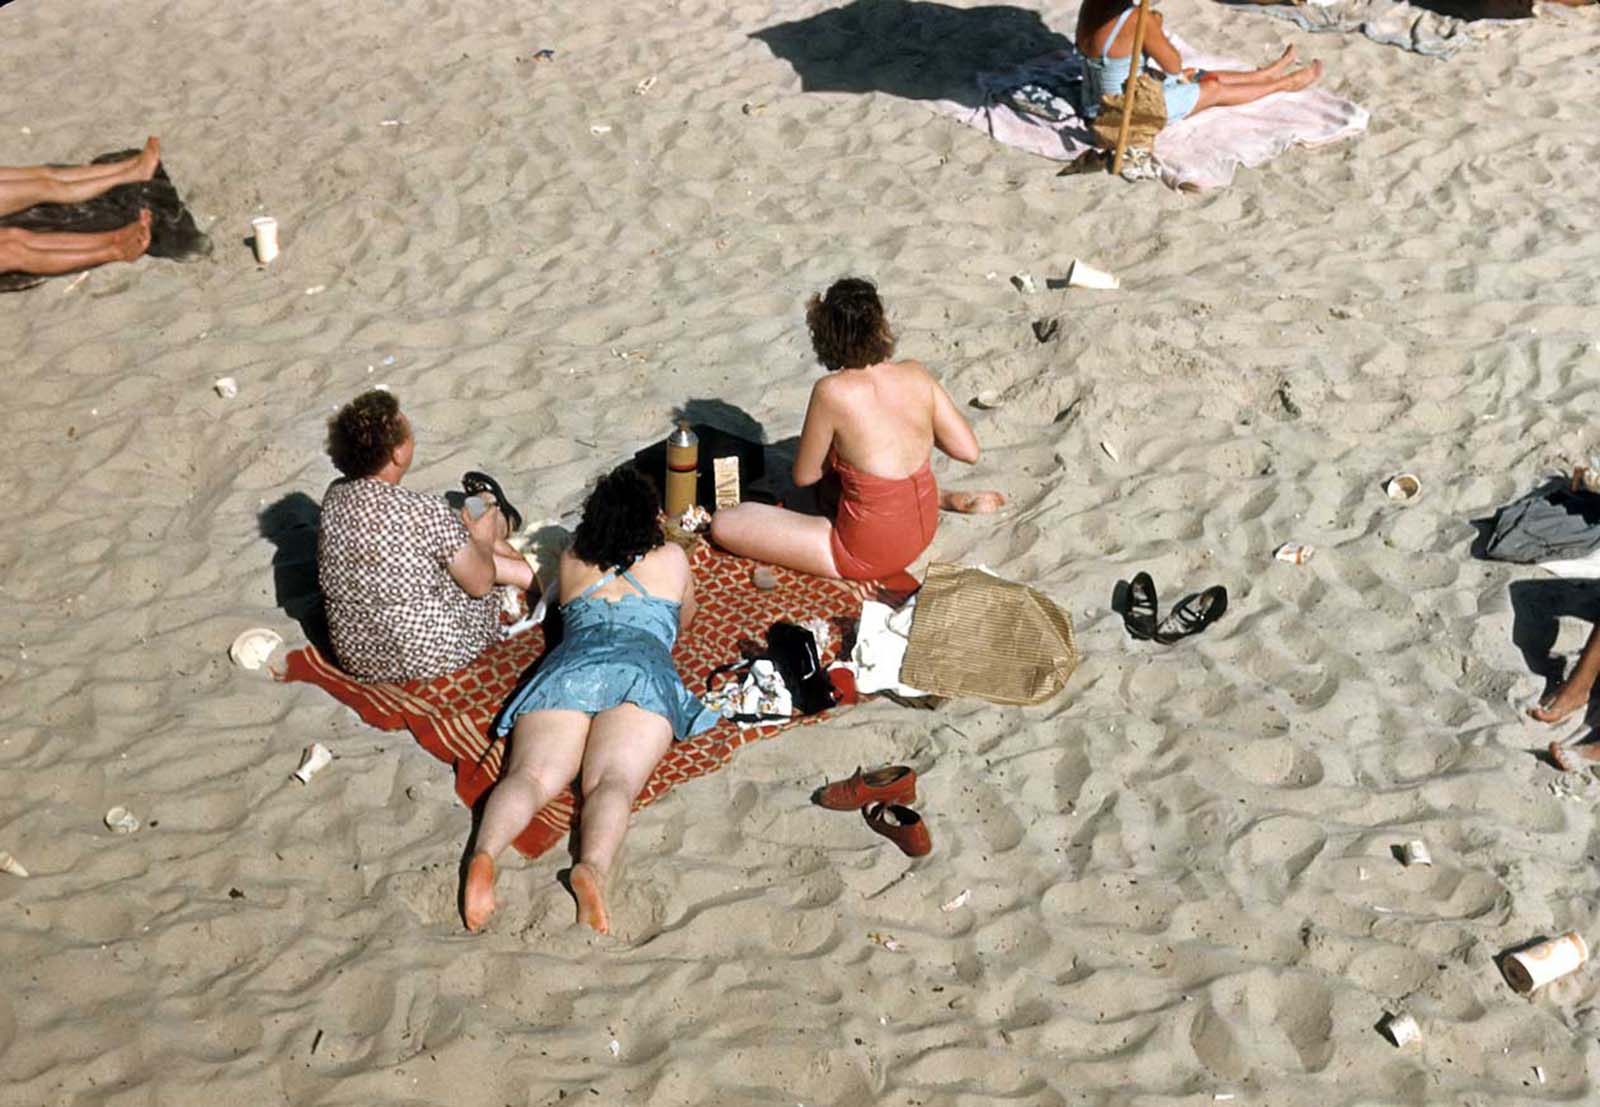 Sunbathers on Coney Island beach.